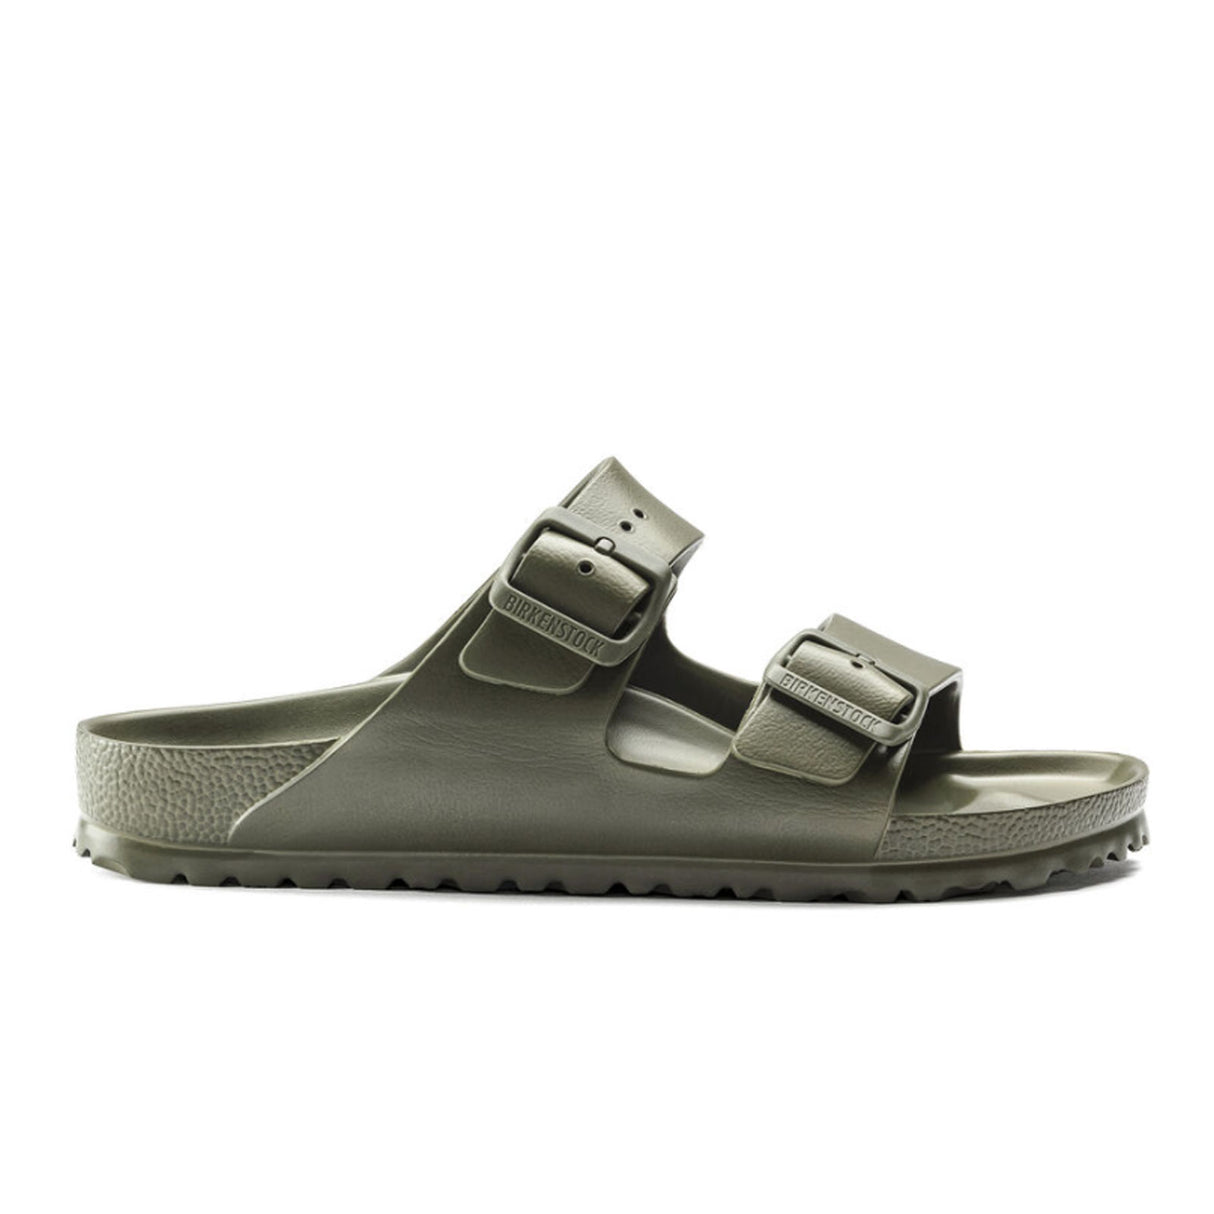 Birkenstock Arizona EVA Sandal (Men) - Khaki/Green Buckle Sandals - Slide - The Heel Shoe Fitters